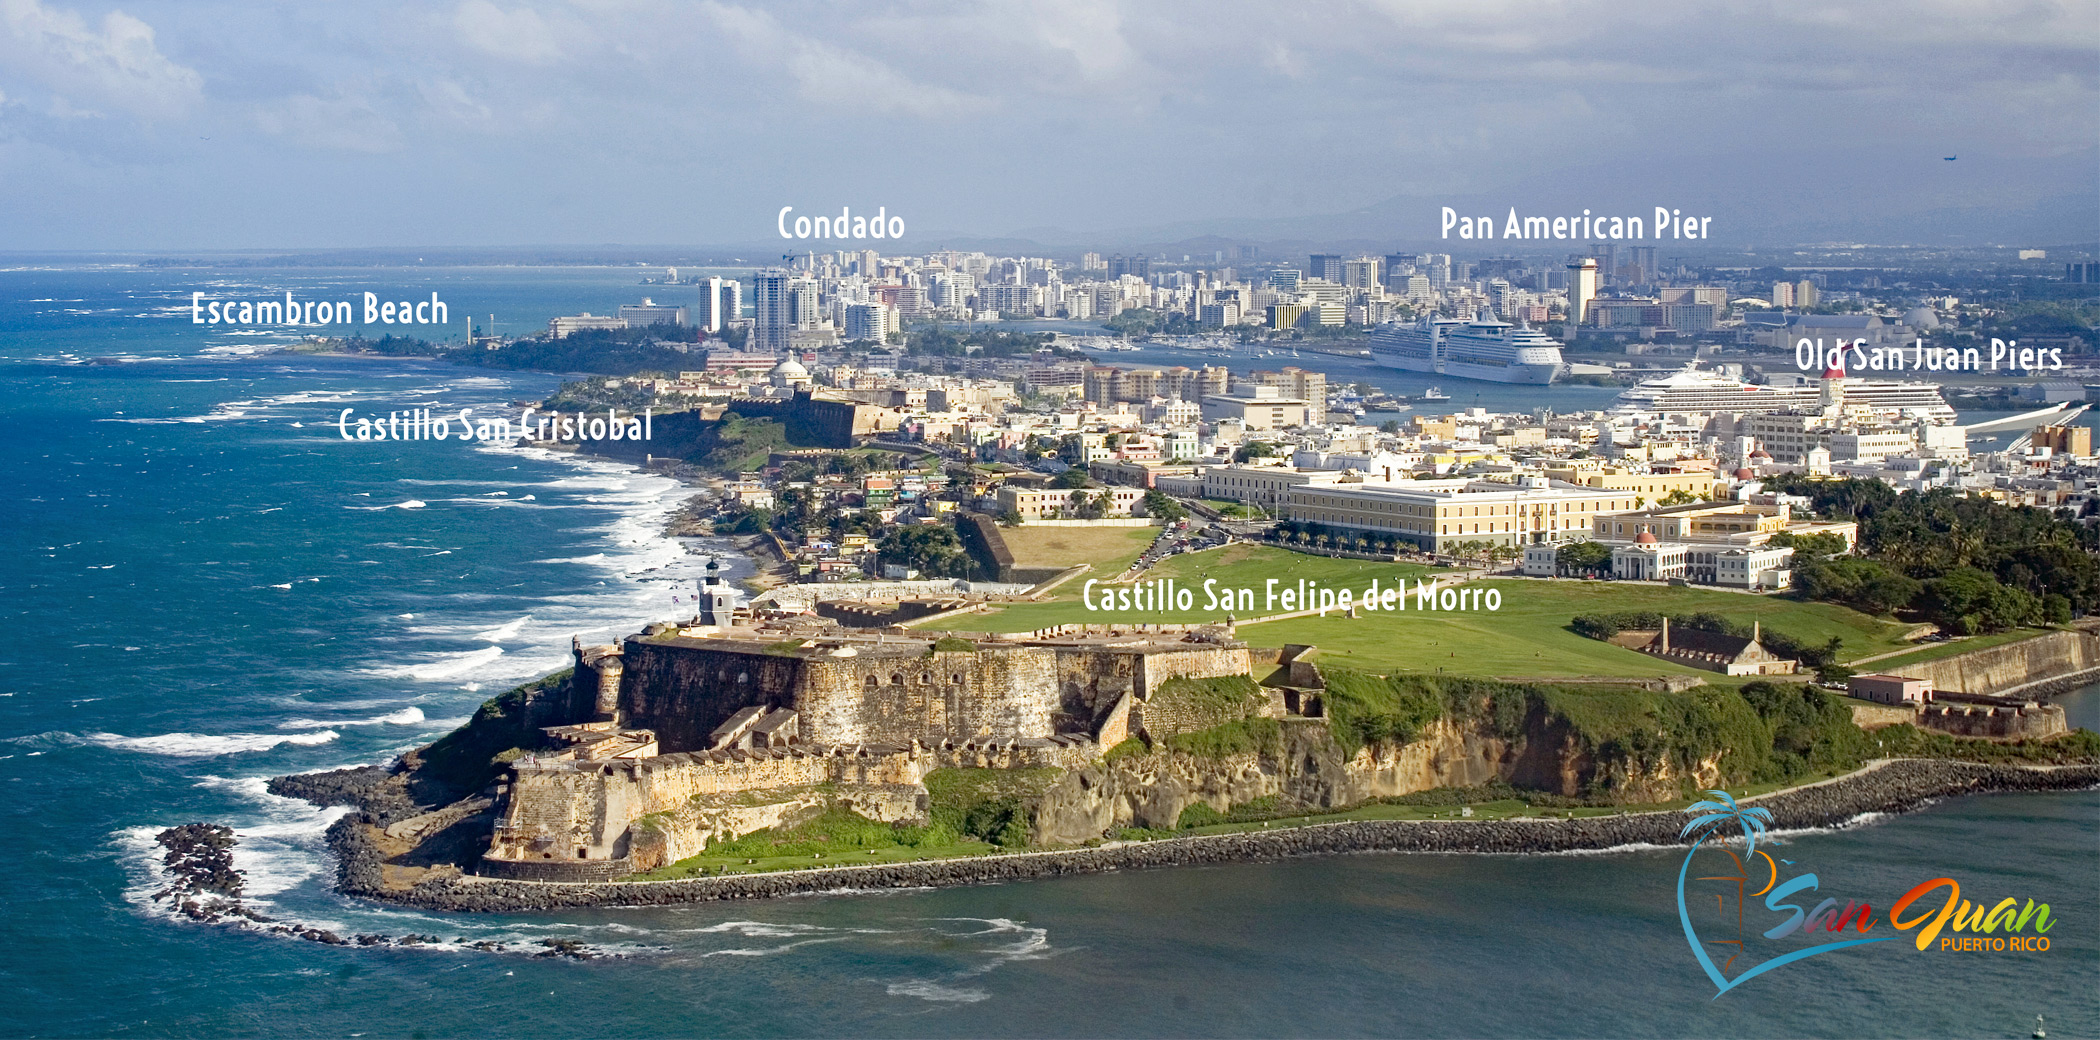 San Juan Cruise Port - Map Image